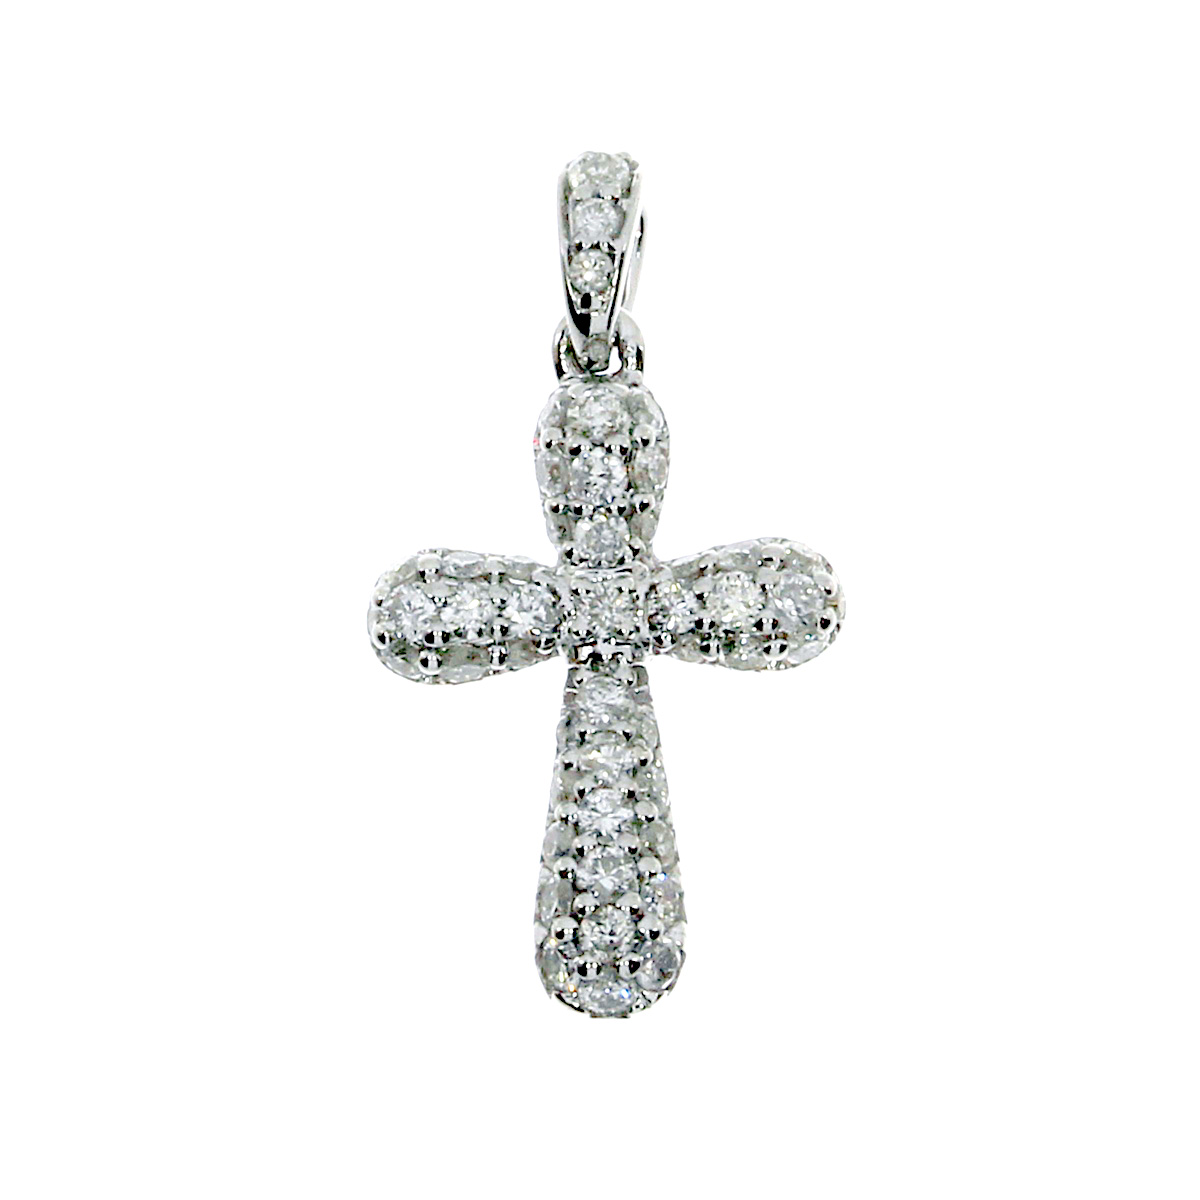 14k white gold cross pendant with shimmering diamonds.